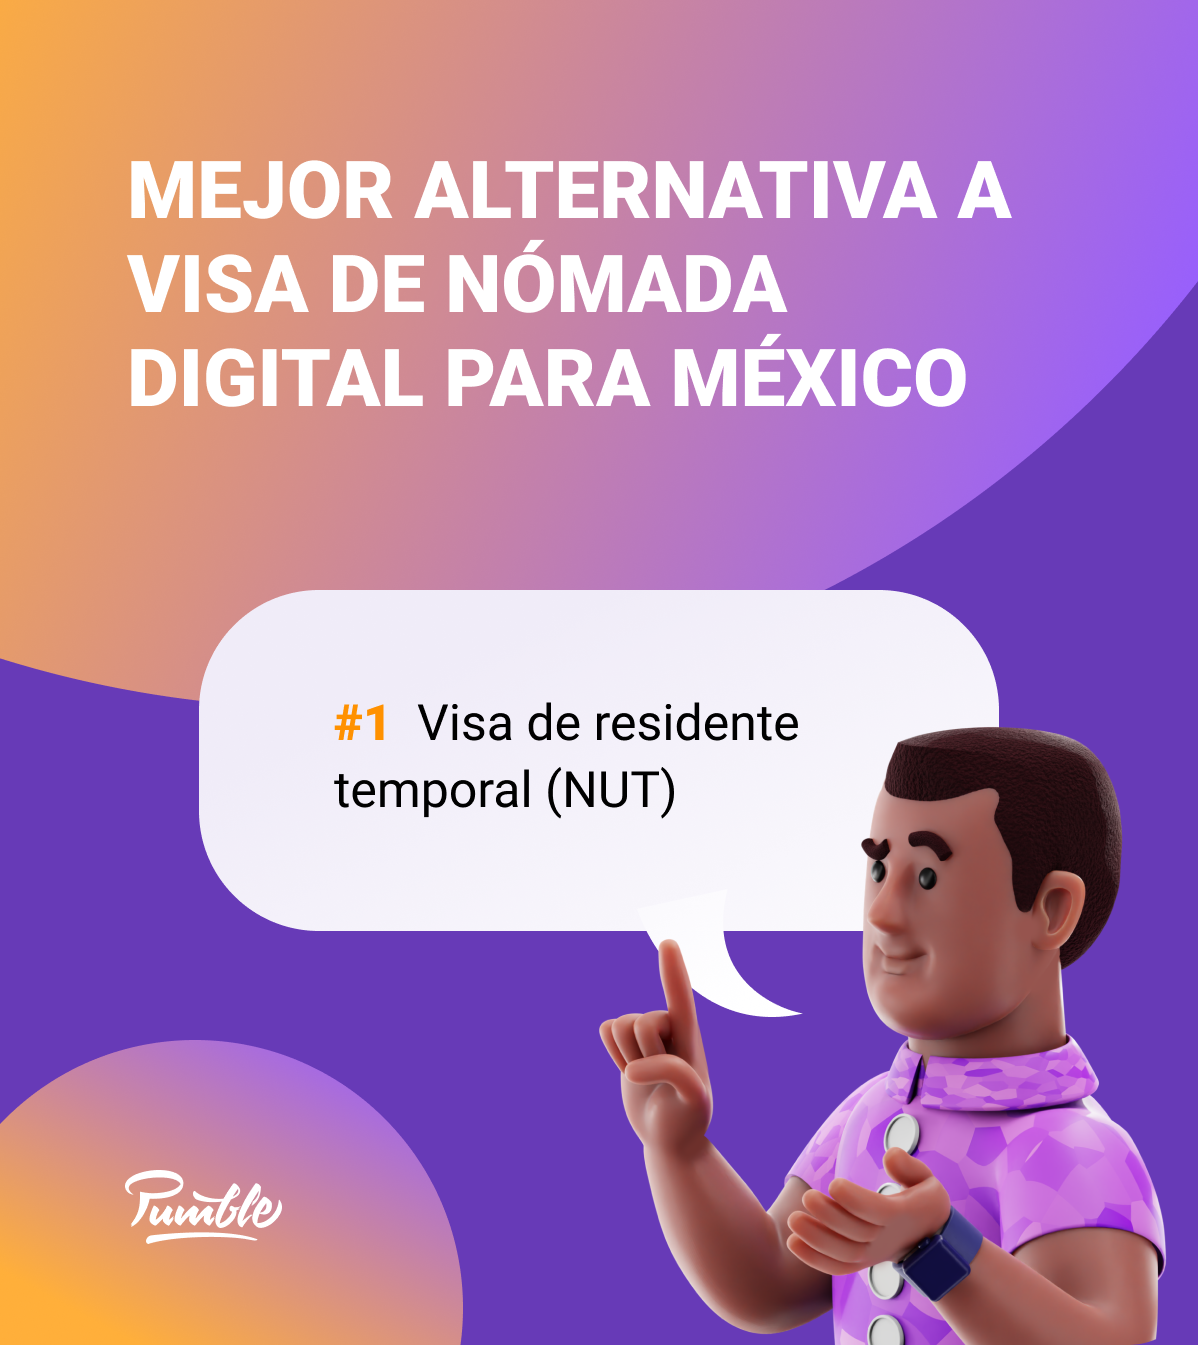 Best alternative for Mexico digital nomad visa